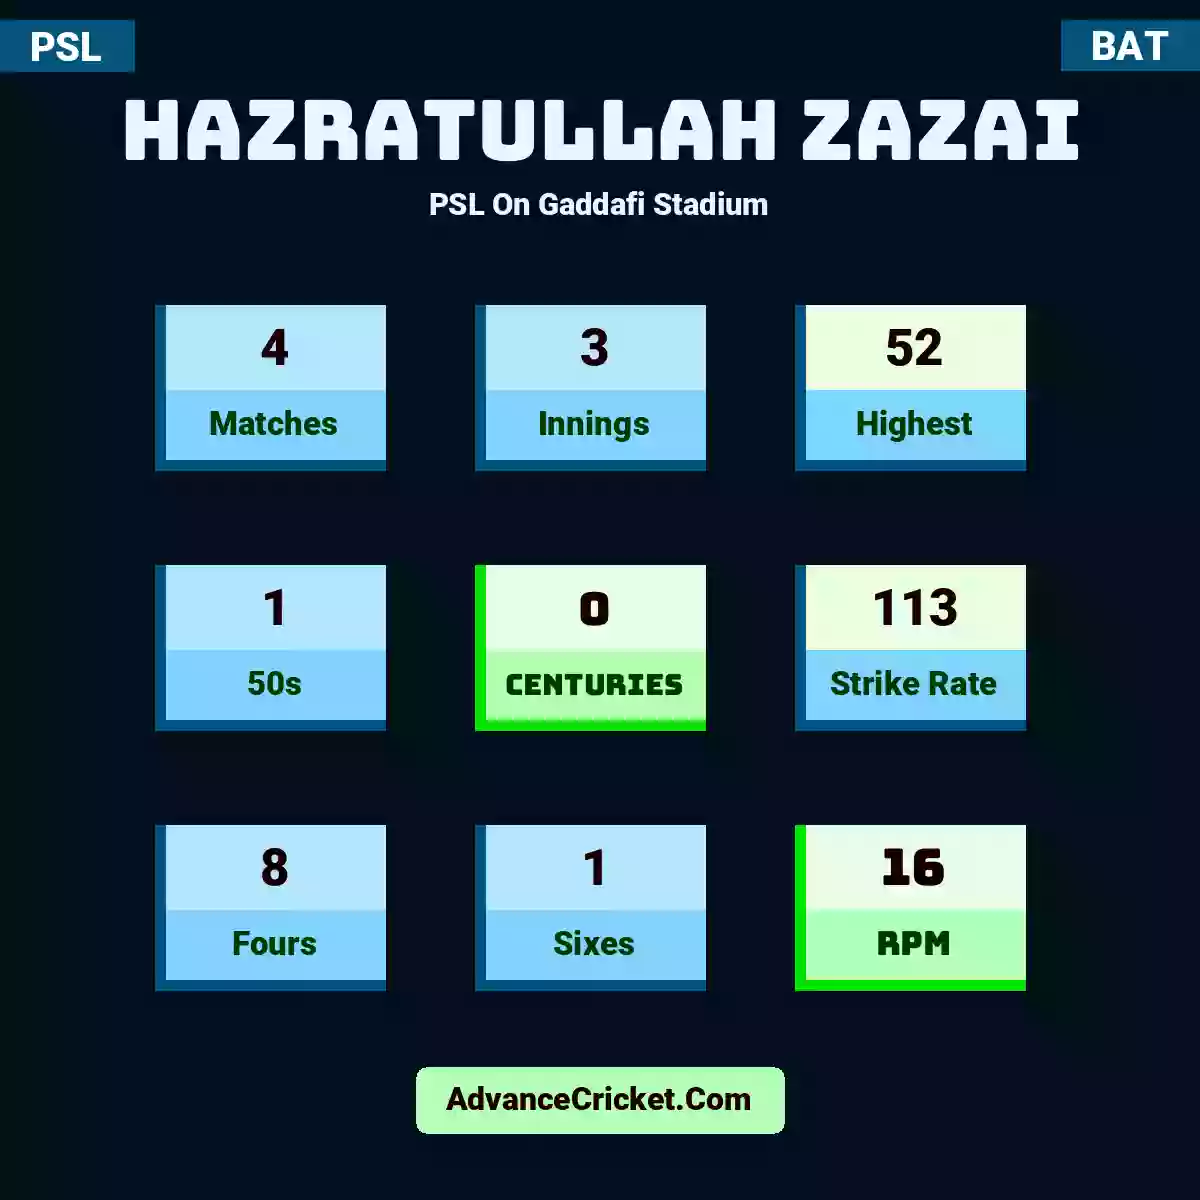 Hazratullah Zazai PSL  On Gaddafi Stadium, Hazratullah Zazai played 4 matches, scored 52 runs as highest, 1 half-centuries, and 0 centuries, with a strike rate of 113. H.Zazai hit 8 fours and 1 sixes, with an RPM of 16.